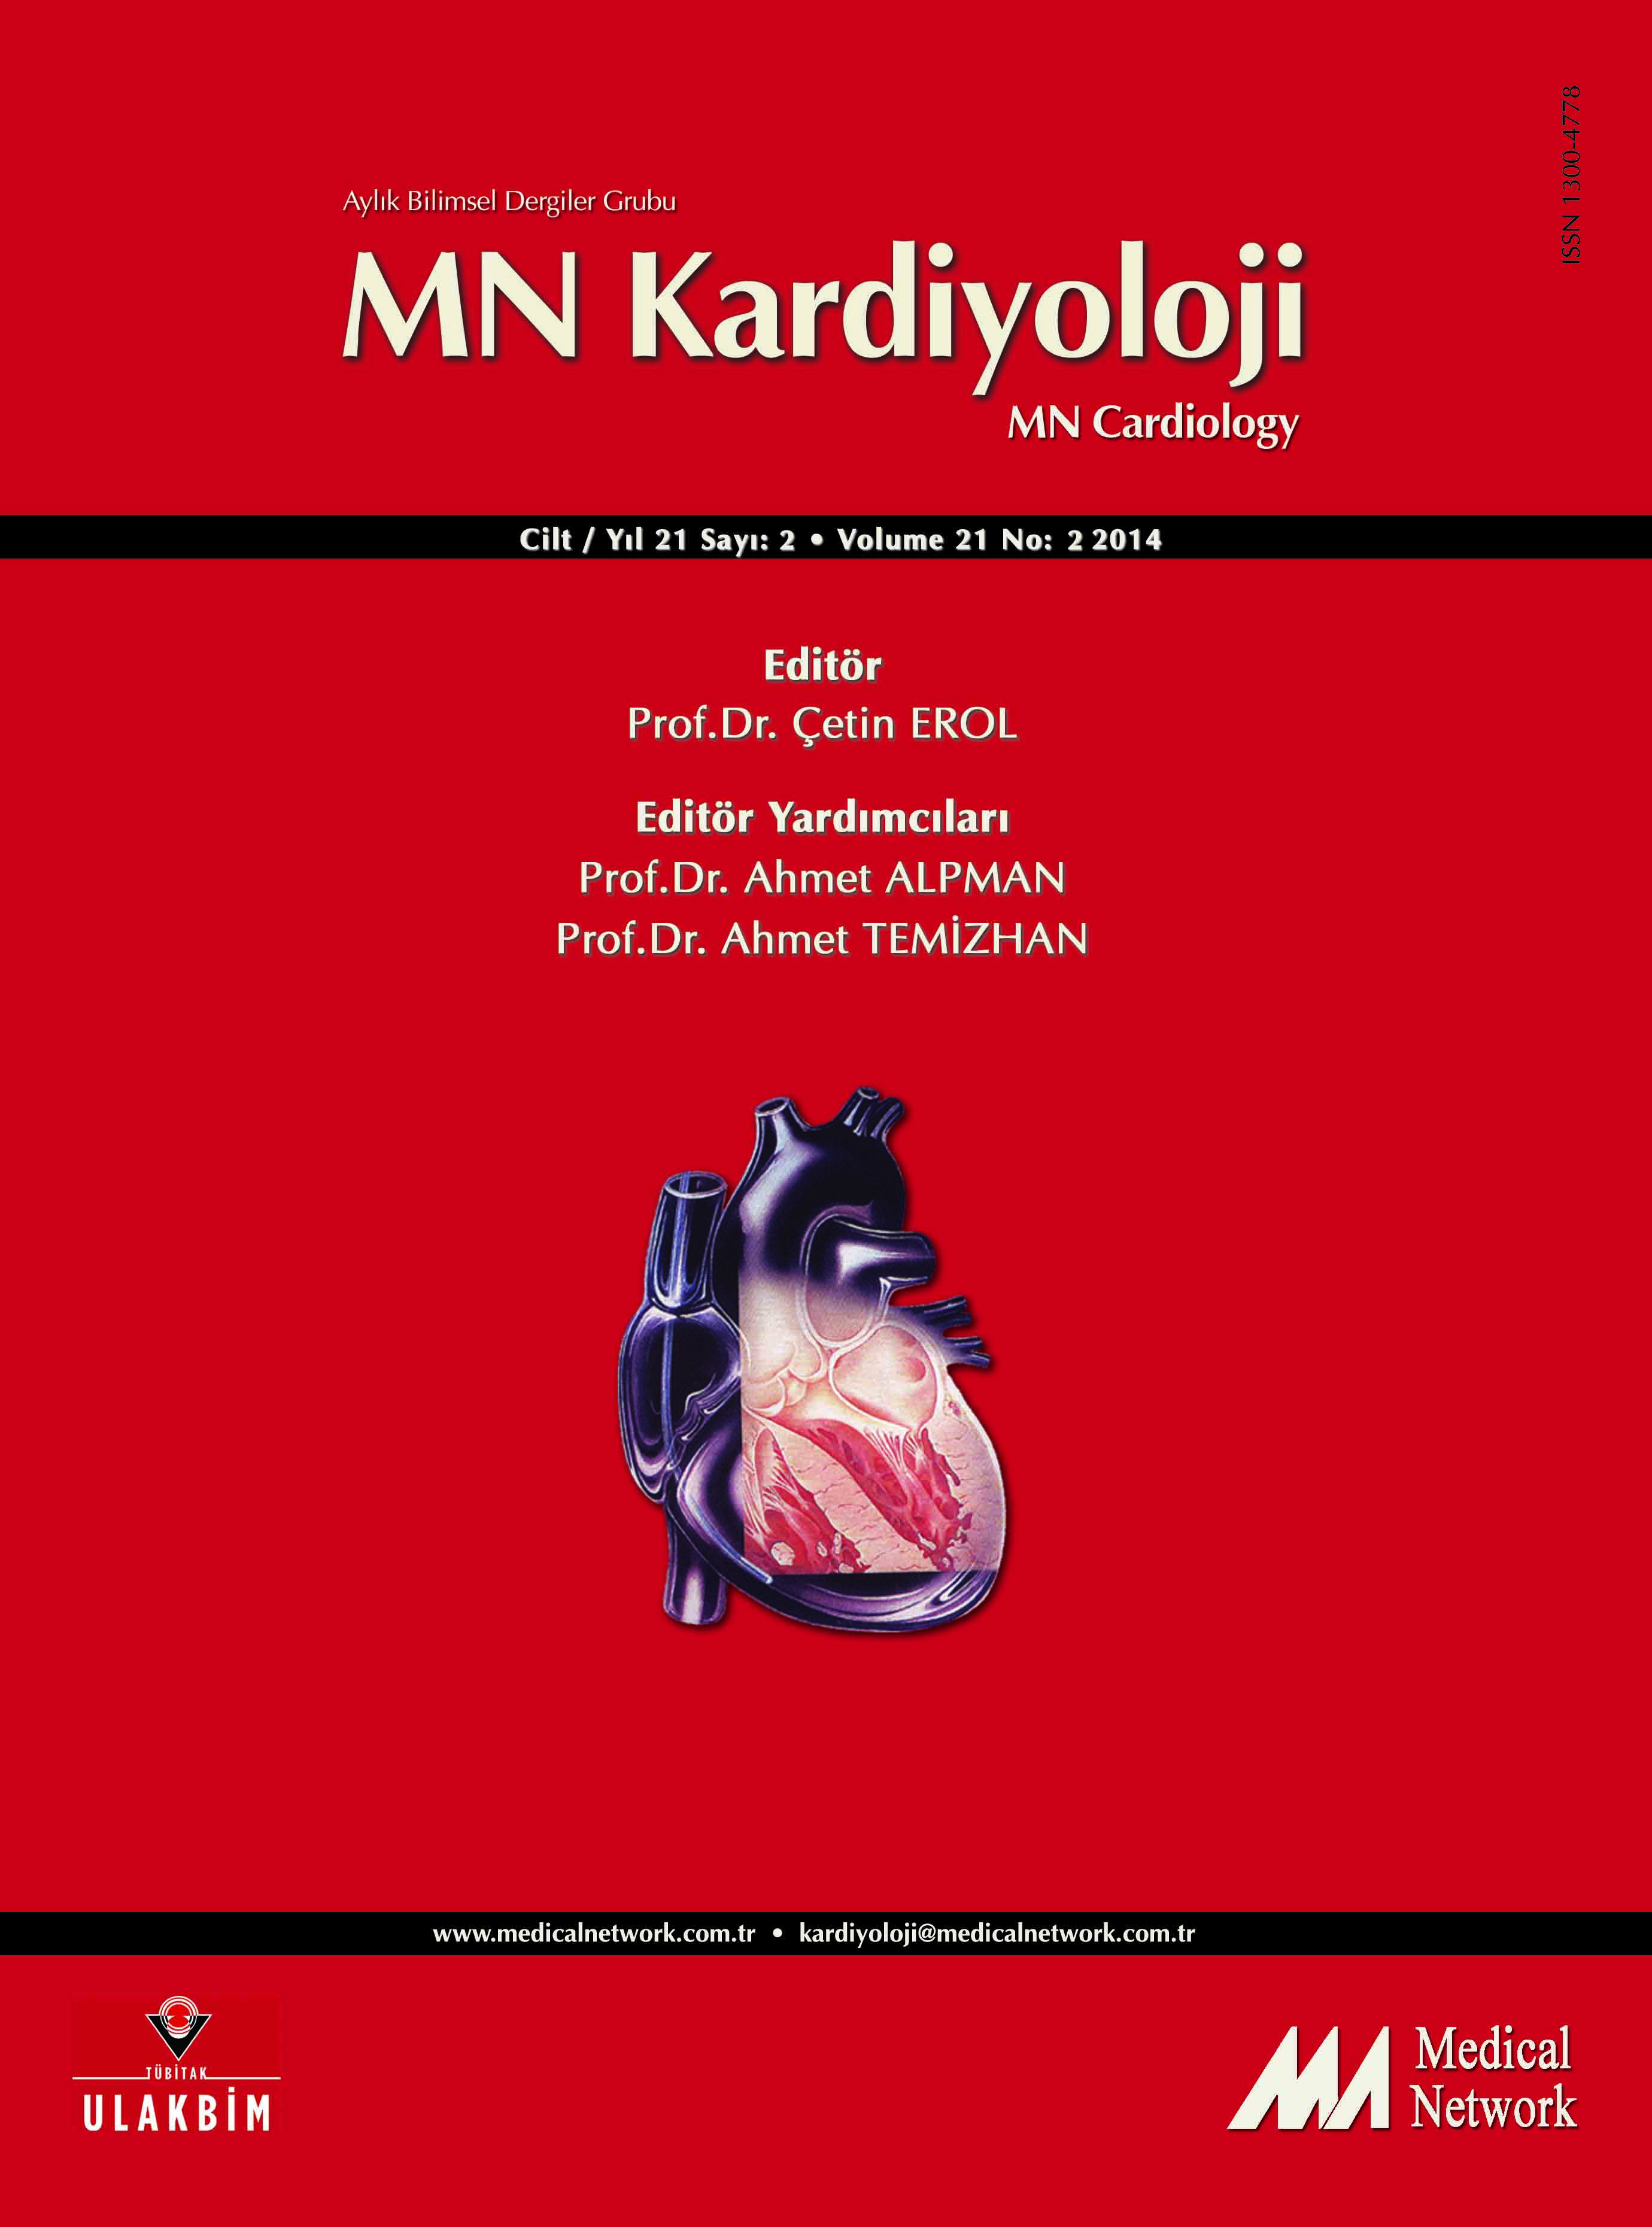 <p>MN Kardiyoloji Cilt: 21 Say: 2 2014 (MN Cardiology Volume: 21 No: 2 2014)</p>